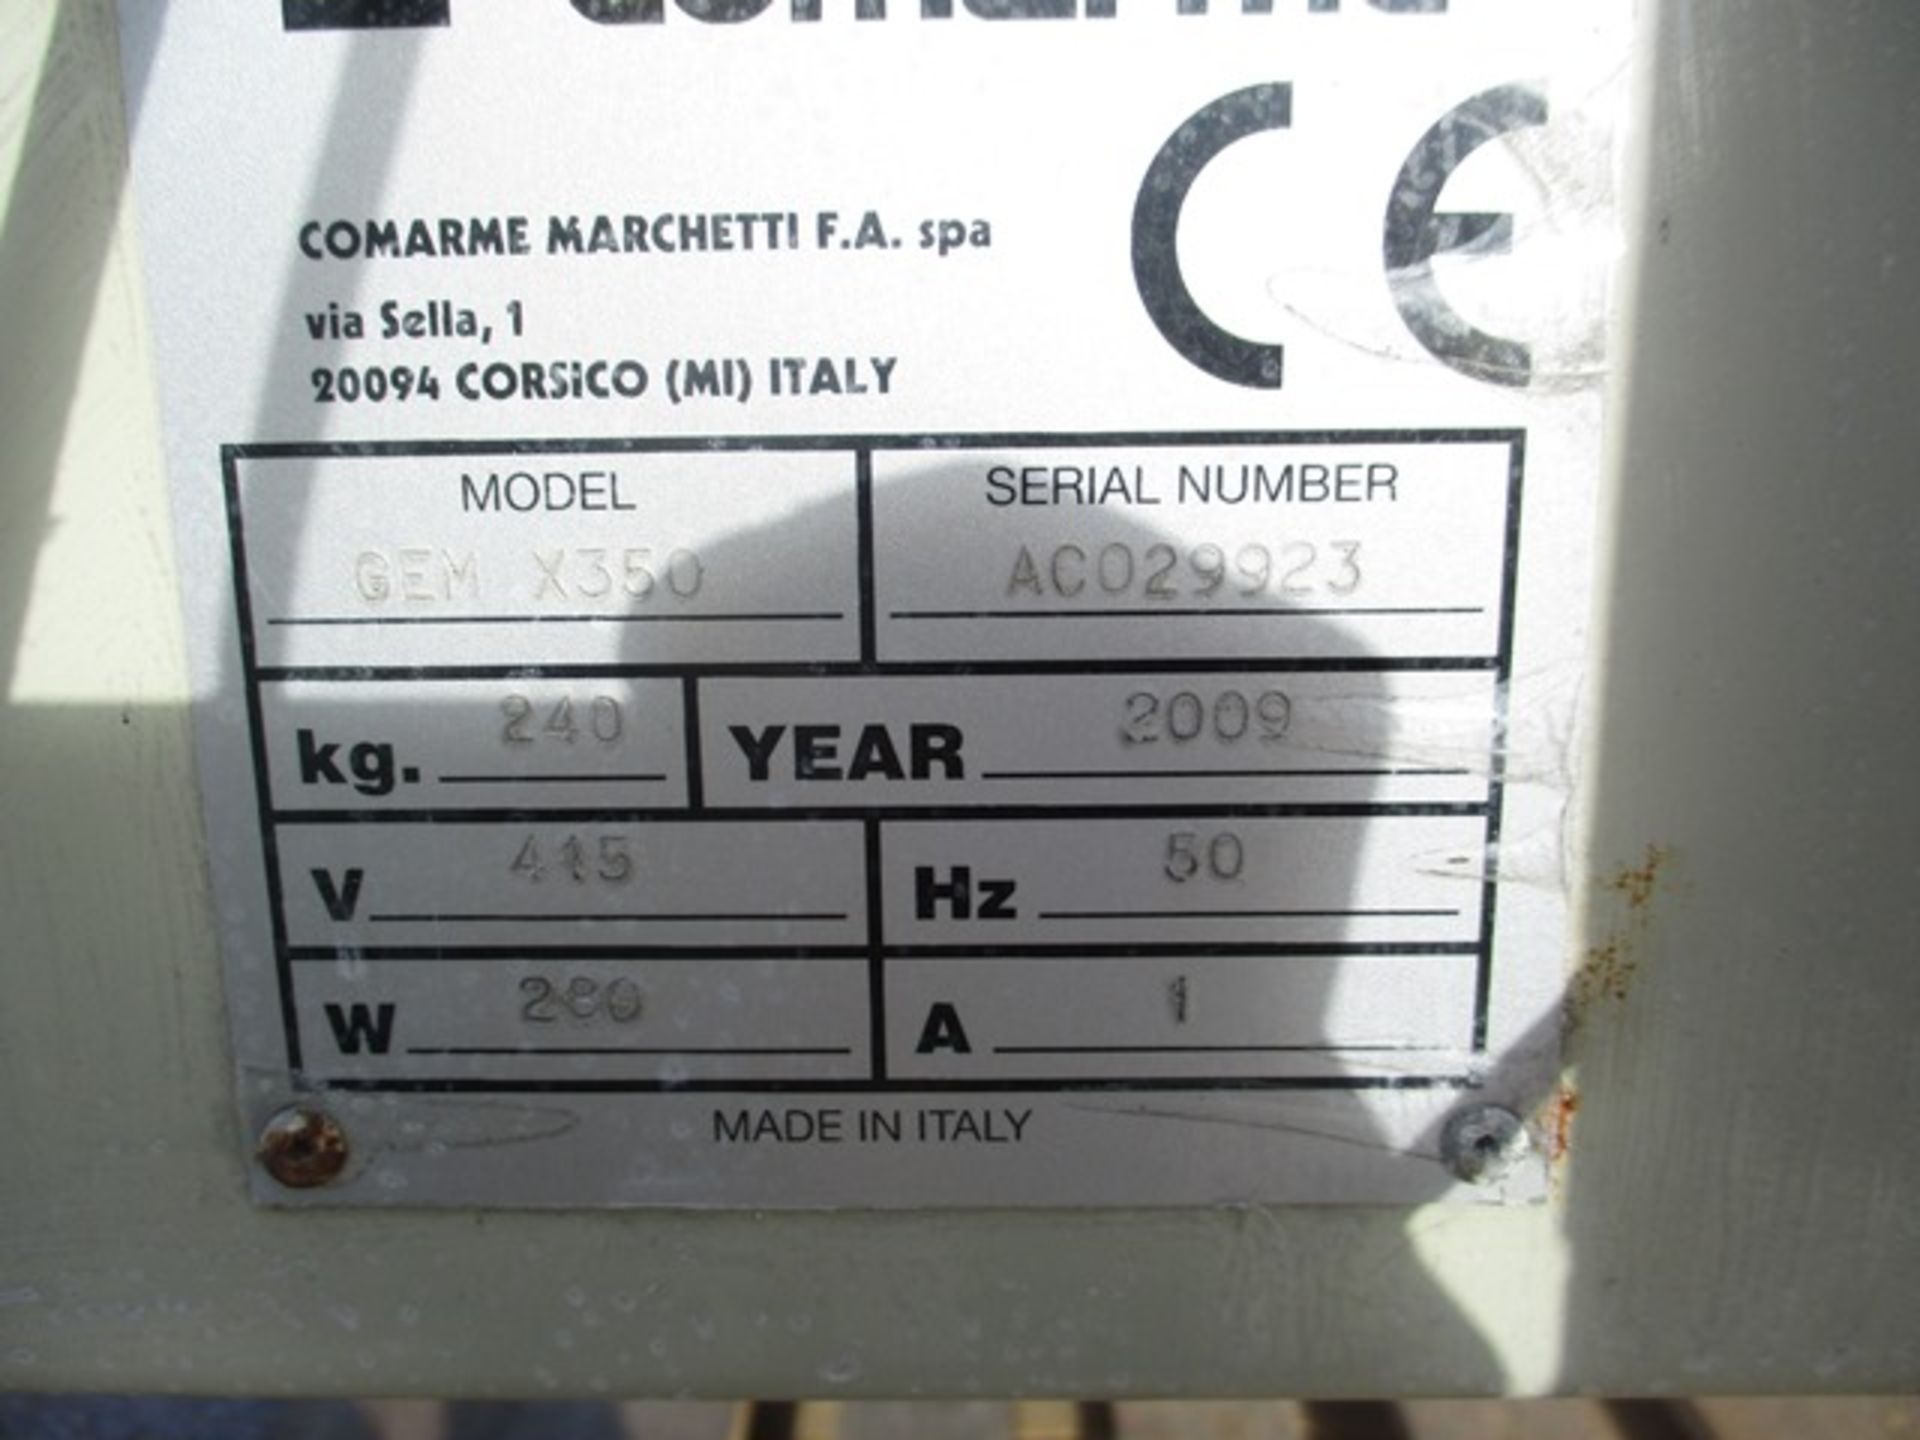 Comarme GEM X350 Comarme Box Tape Machine - Image 3 of 5